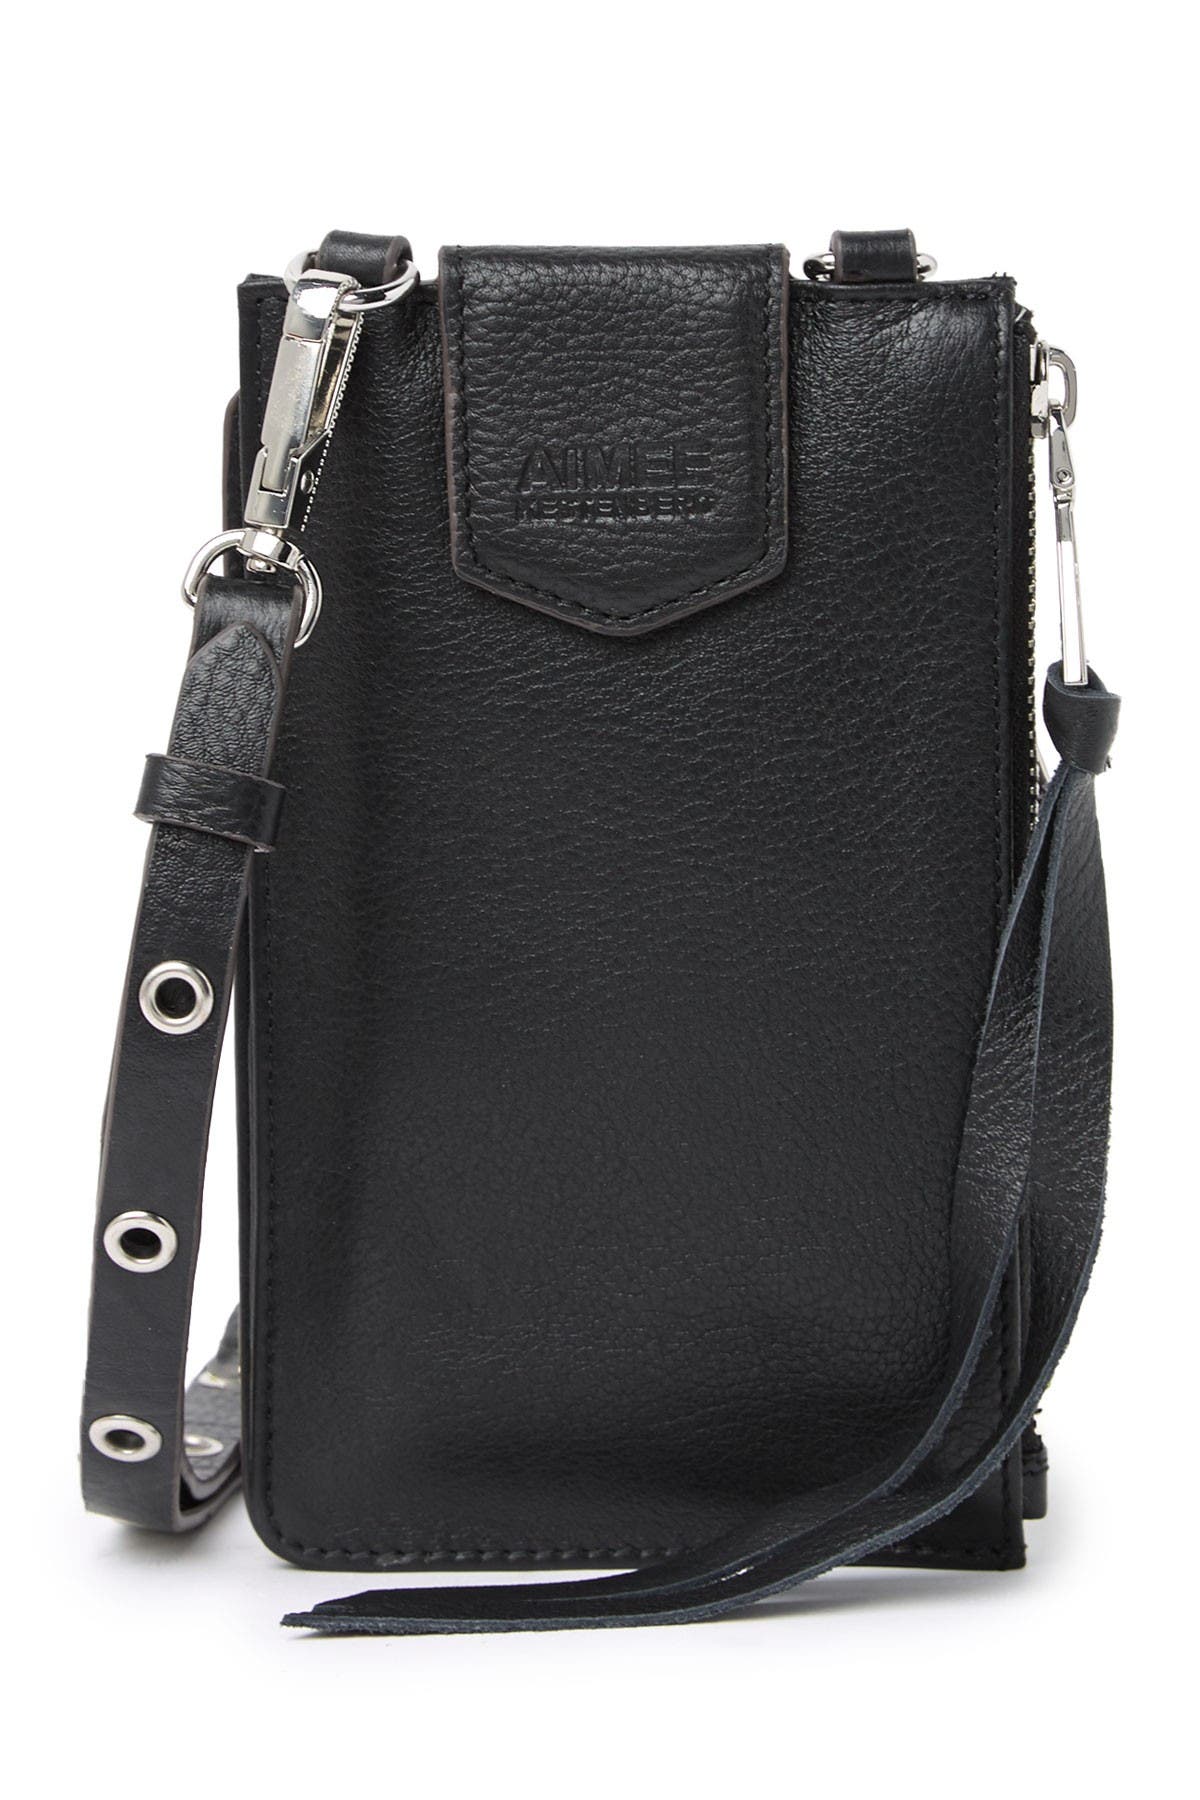 Aimee Kestenberg Out Of Office Phone Crossbody Bag In Black | ModeSens